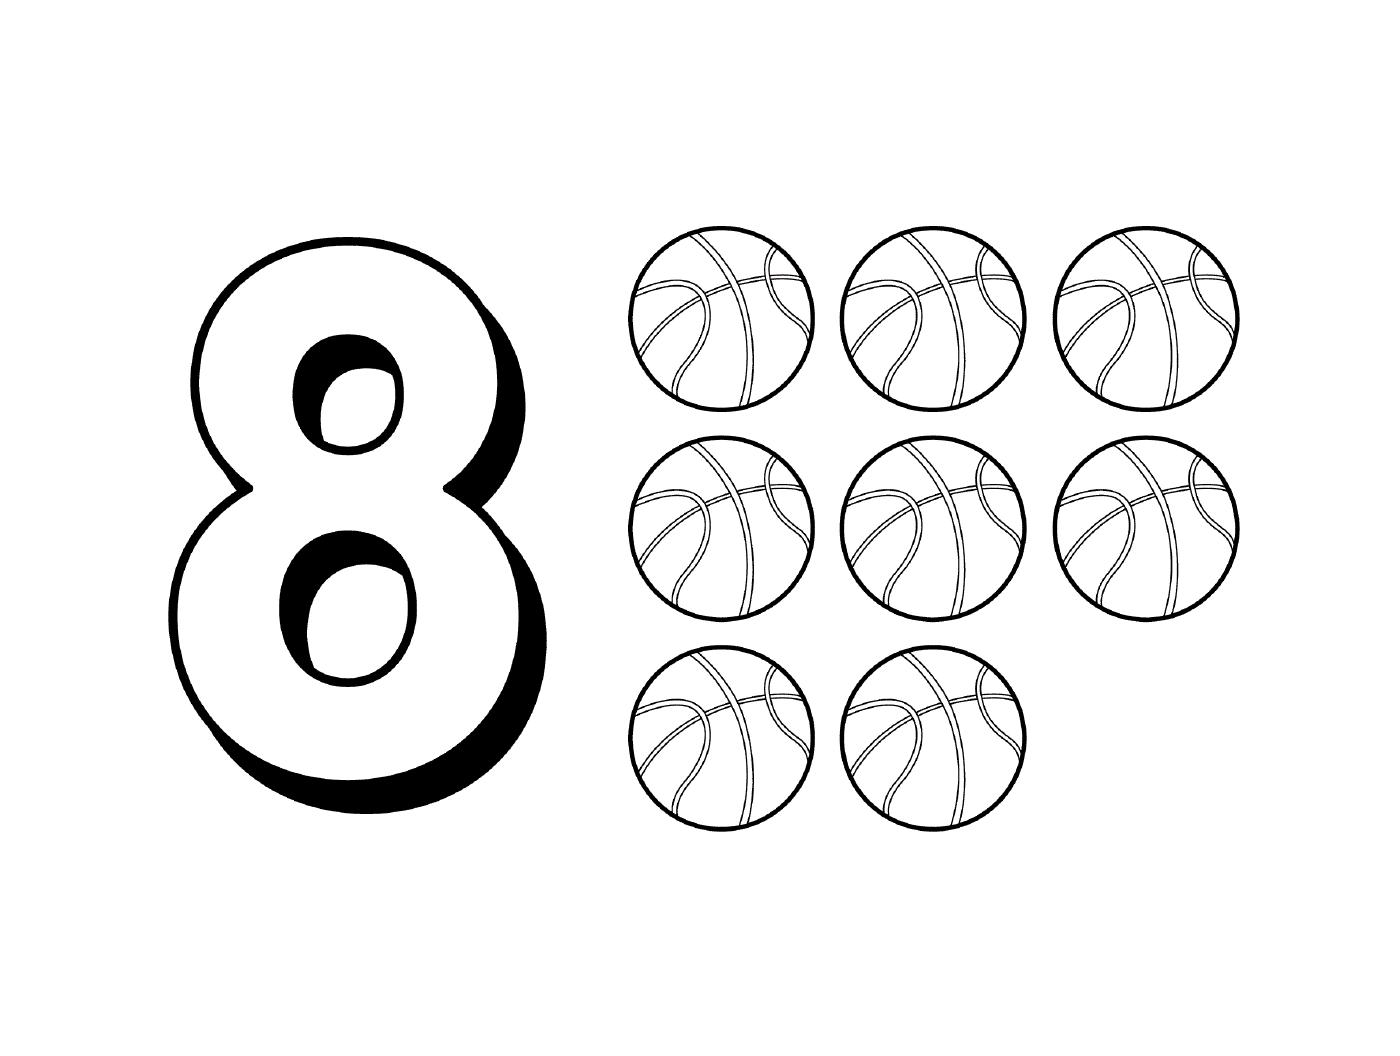  Figura ocho con nueve pelotas de baloncesto 